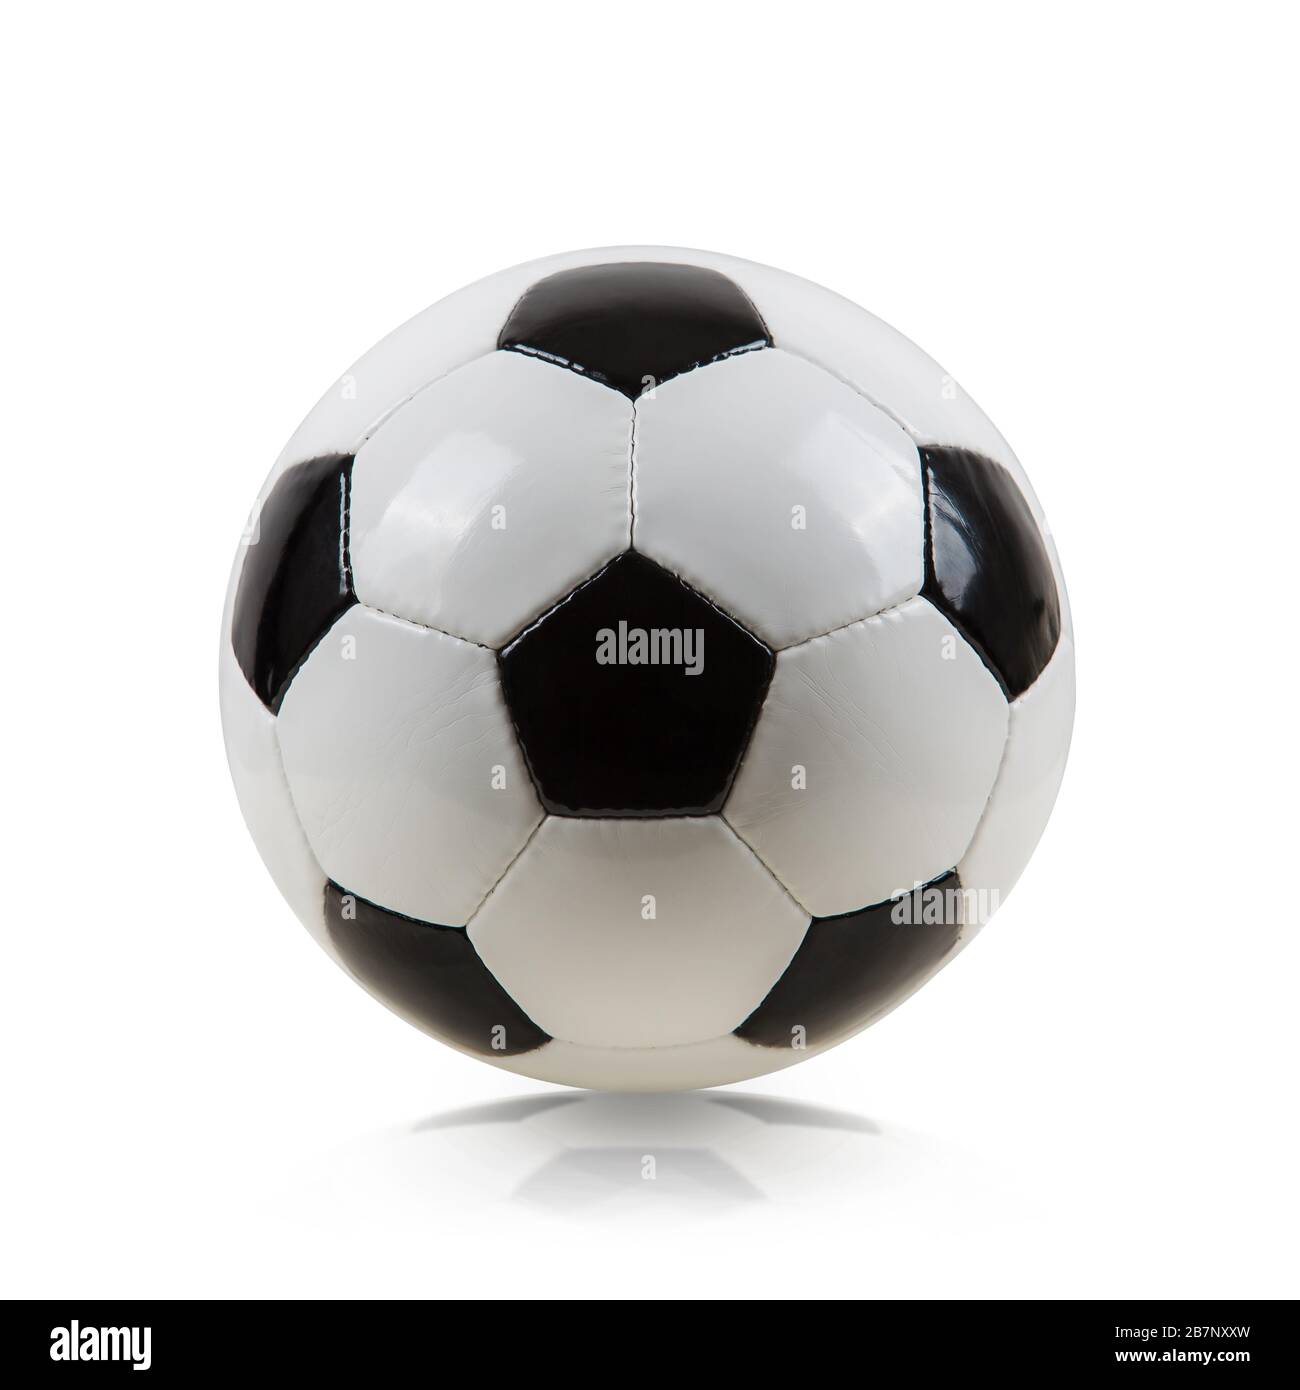 Pelota de fútbol clásica, patrón hexagonal típico, aislada sobre fondo  blanco. Símbolo de pelota de fútbol tradicional, foto real de estudio  Fotografía de stock - Alamy